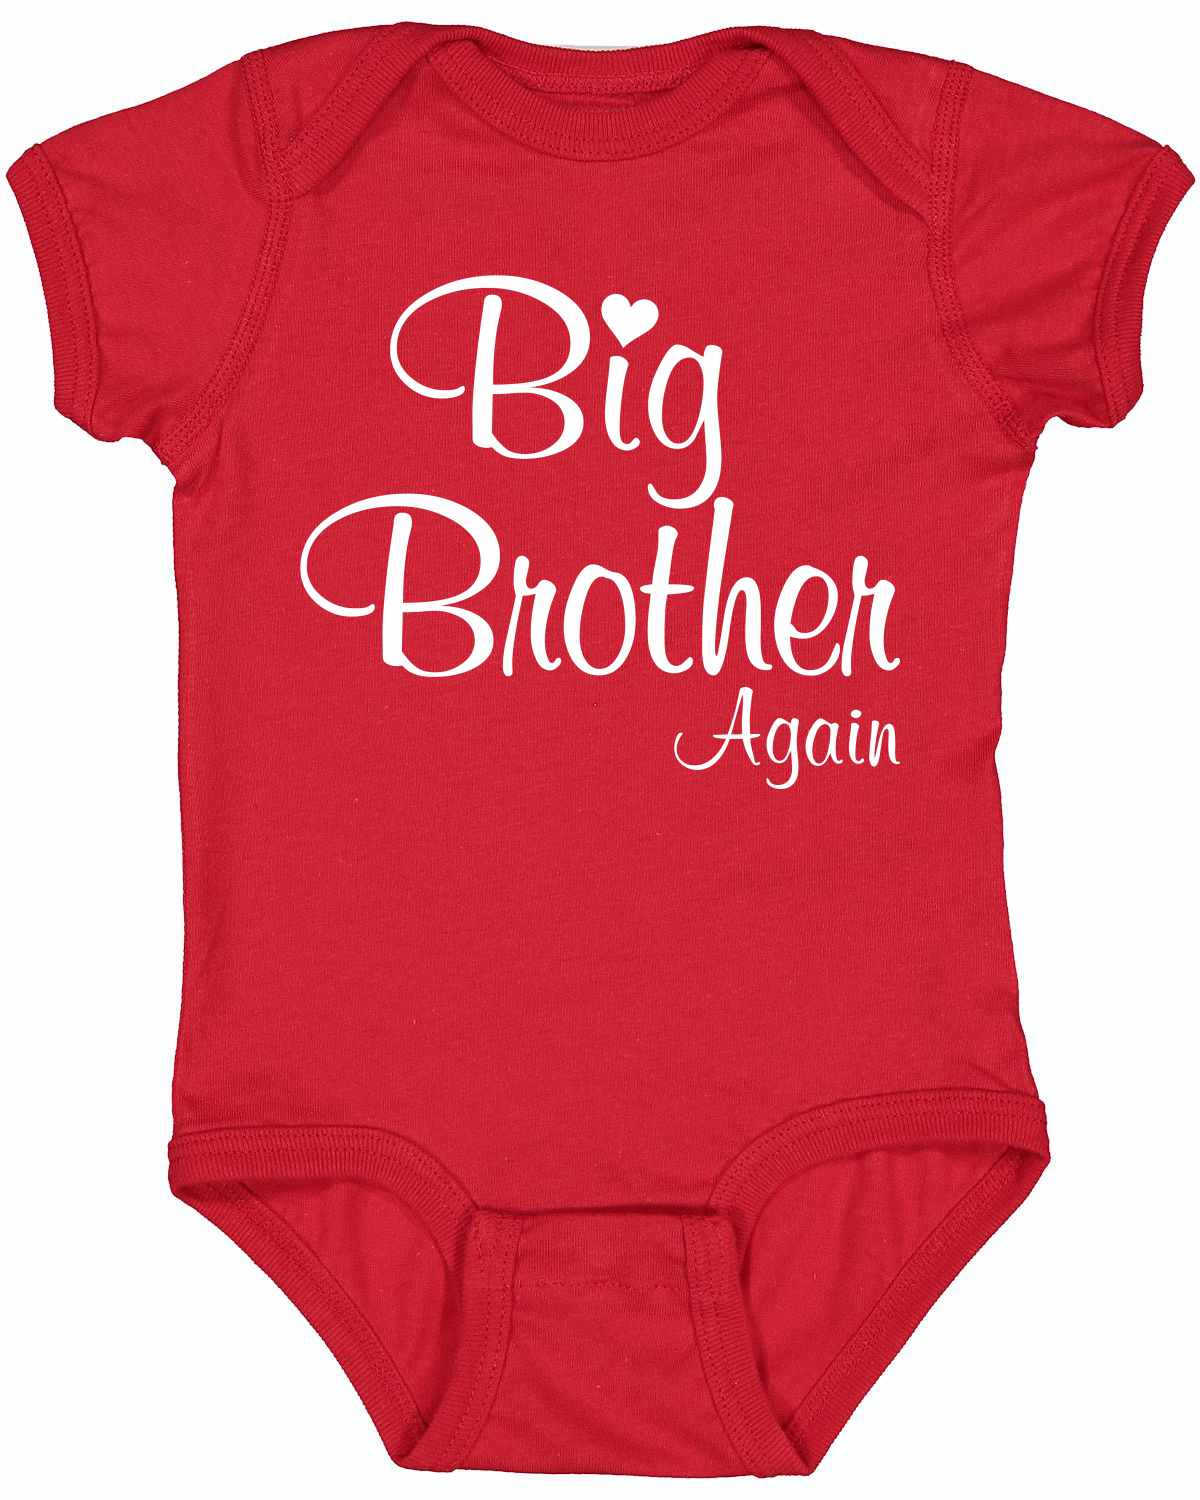 Big Brother Again on Infant BodySuit (#1337-10)